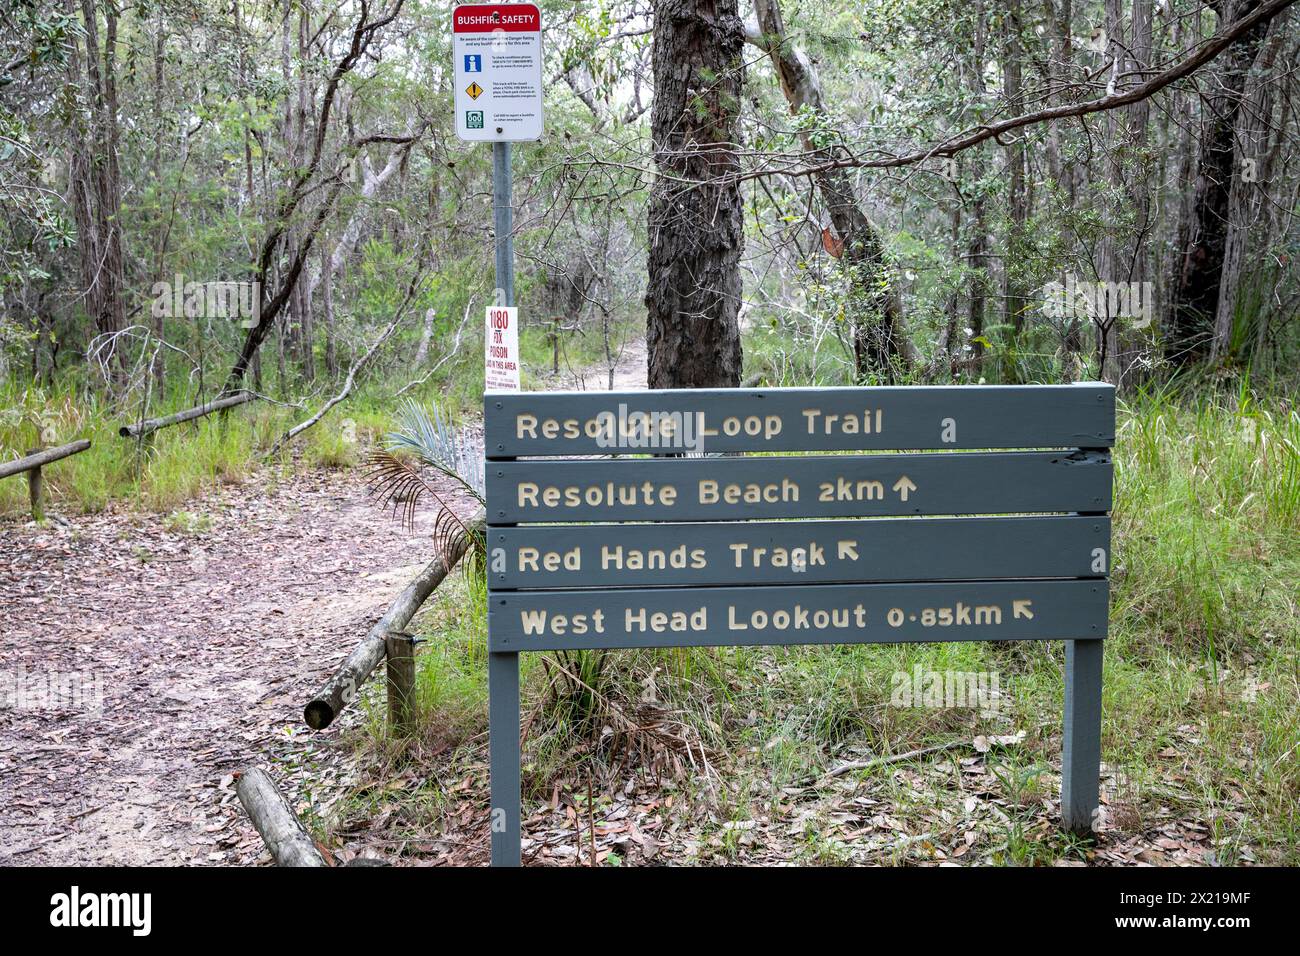 Ku-ring-gai chase national park near Sydney, The resolute loop trail walk at West Head, bush walking trail through the park, Sydney,NSW,Australia Stock Photo